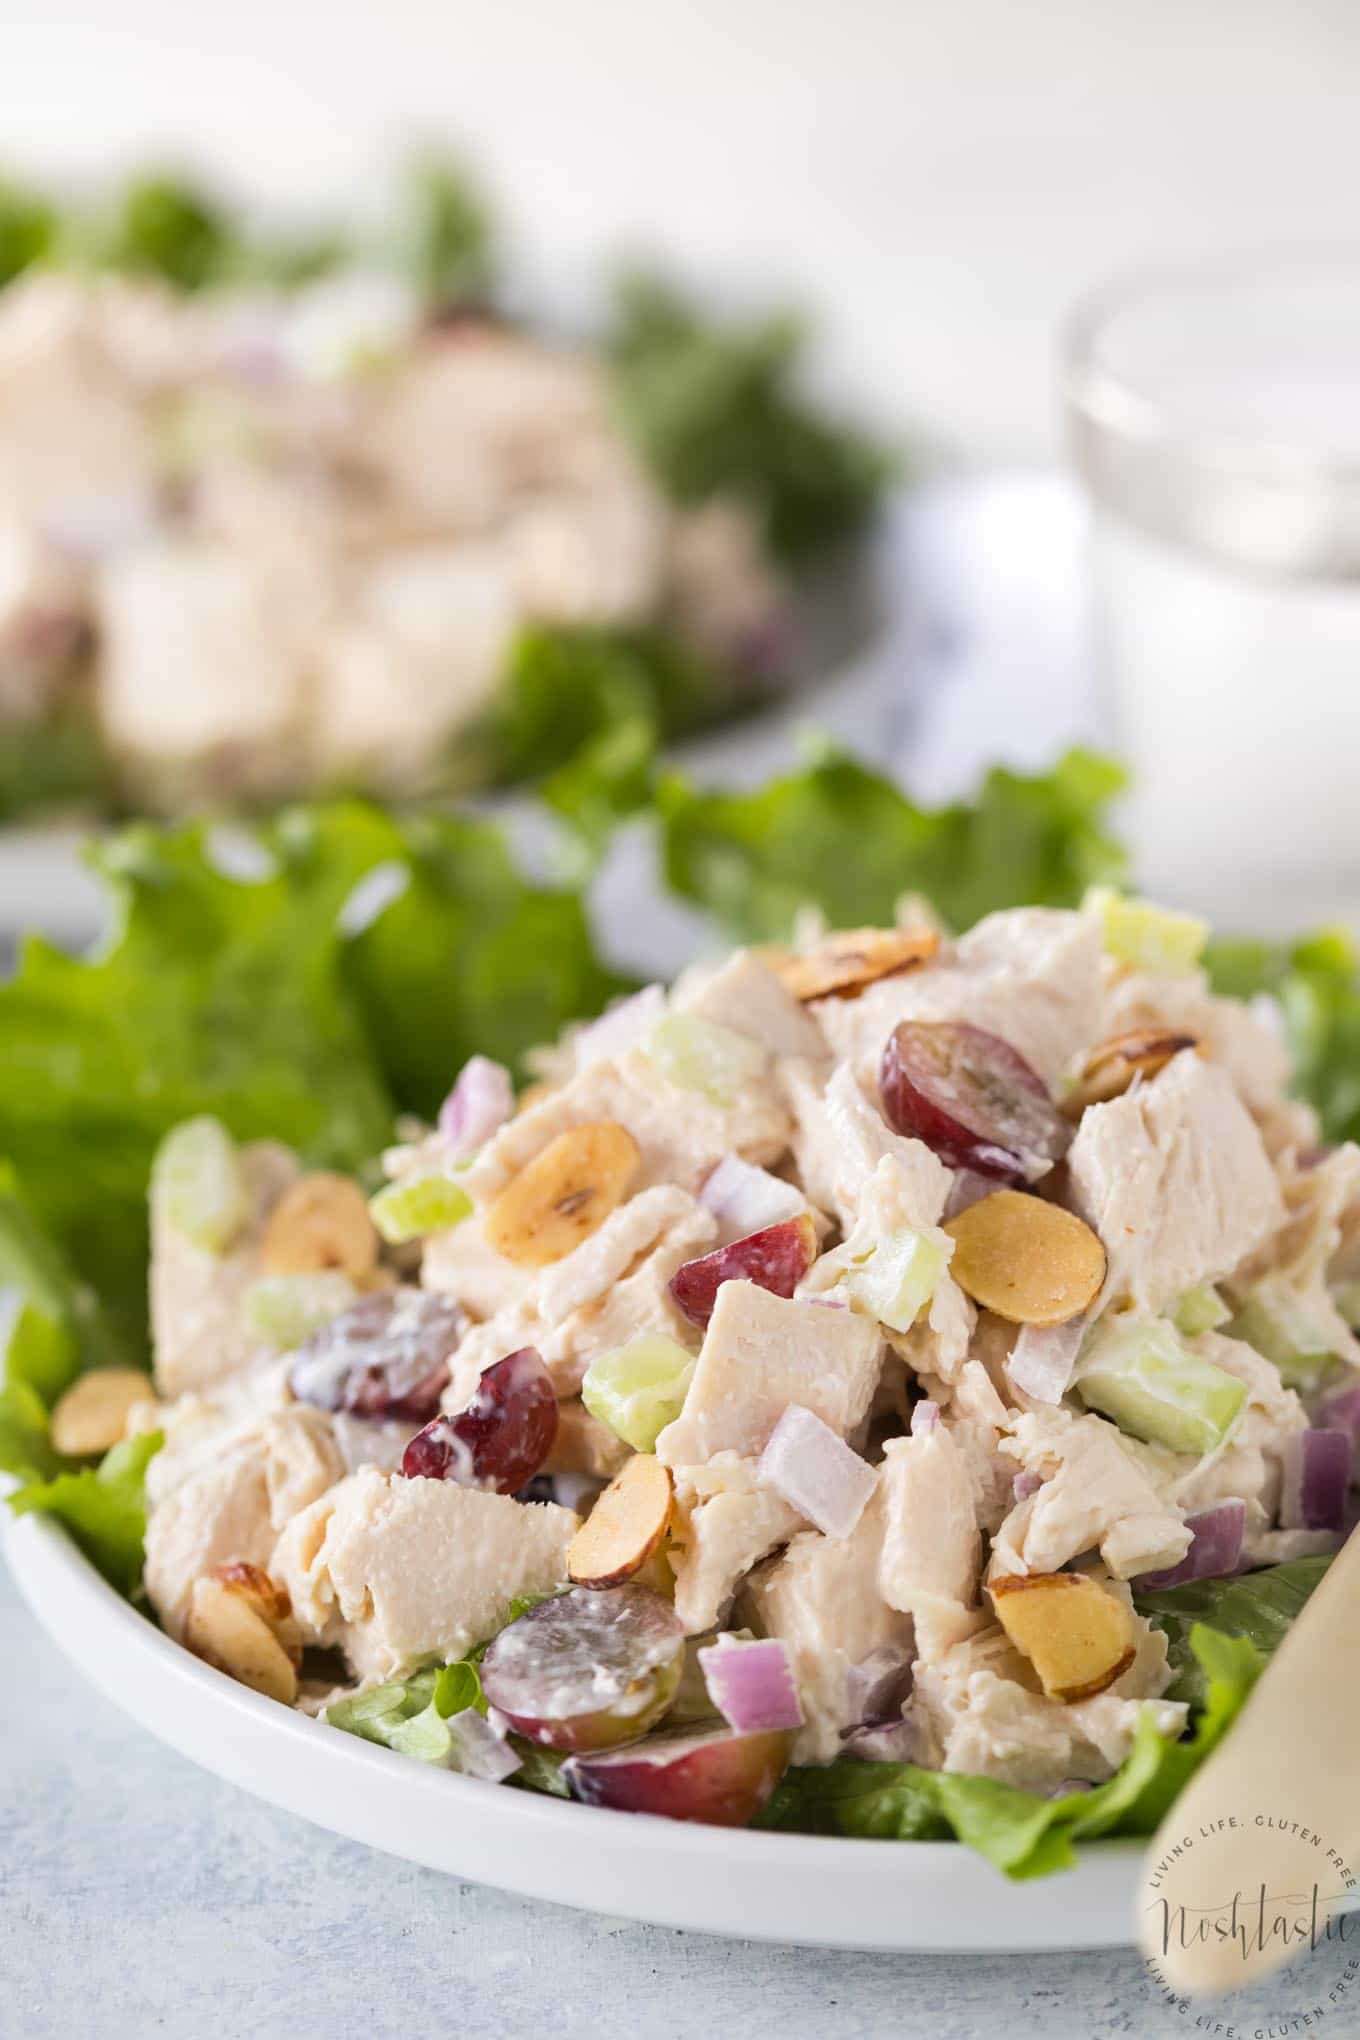 Southern Chicken Salad Recipe